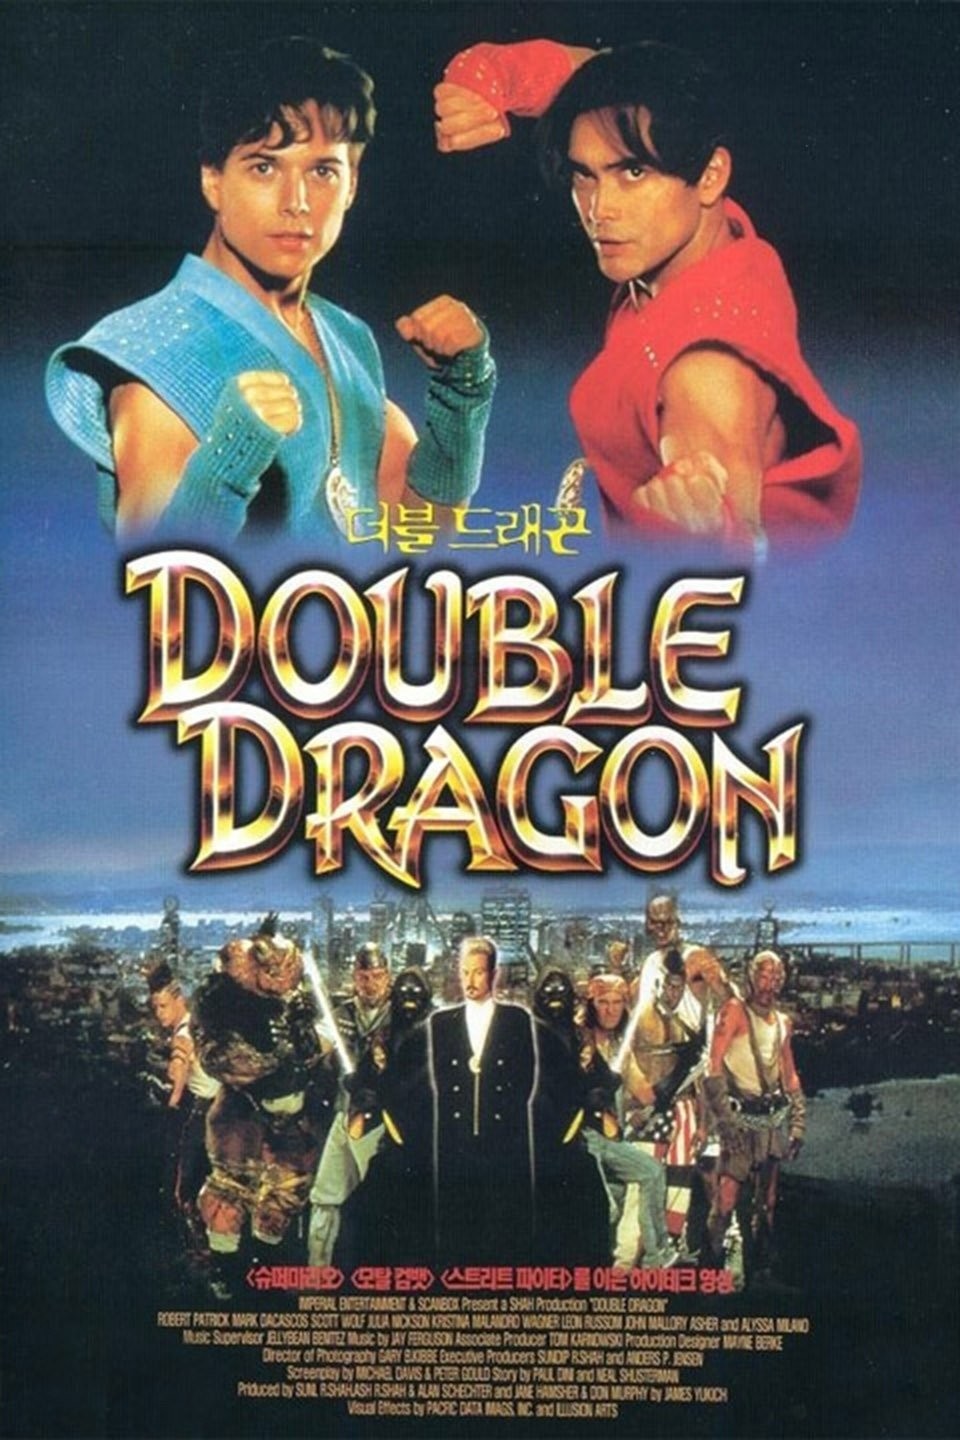 Double Dragon 4 - Full Game 100% Walkthrough